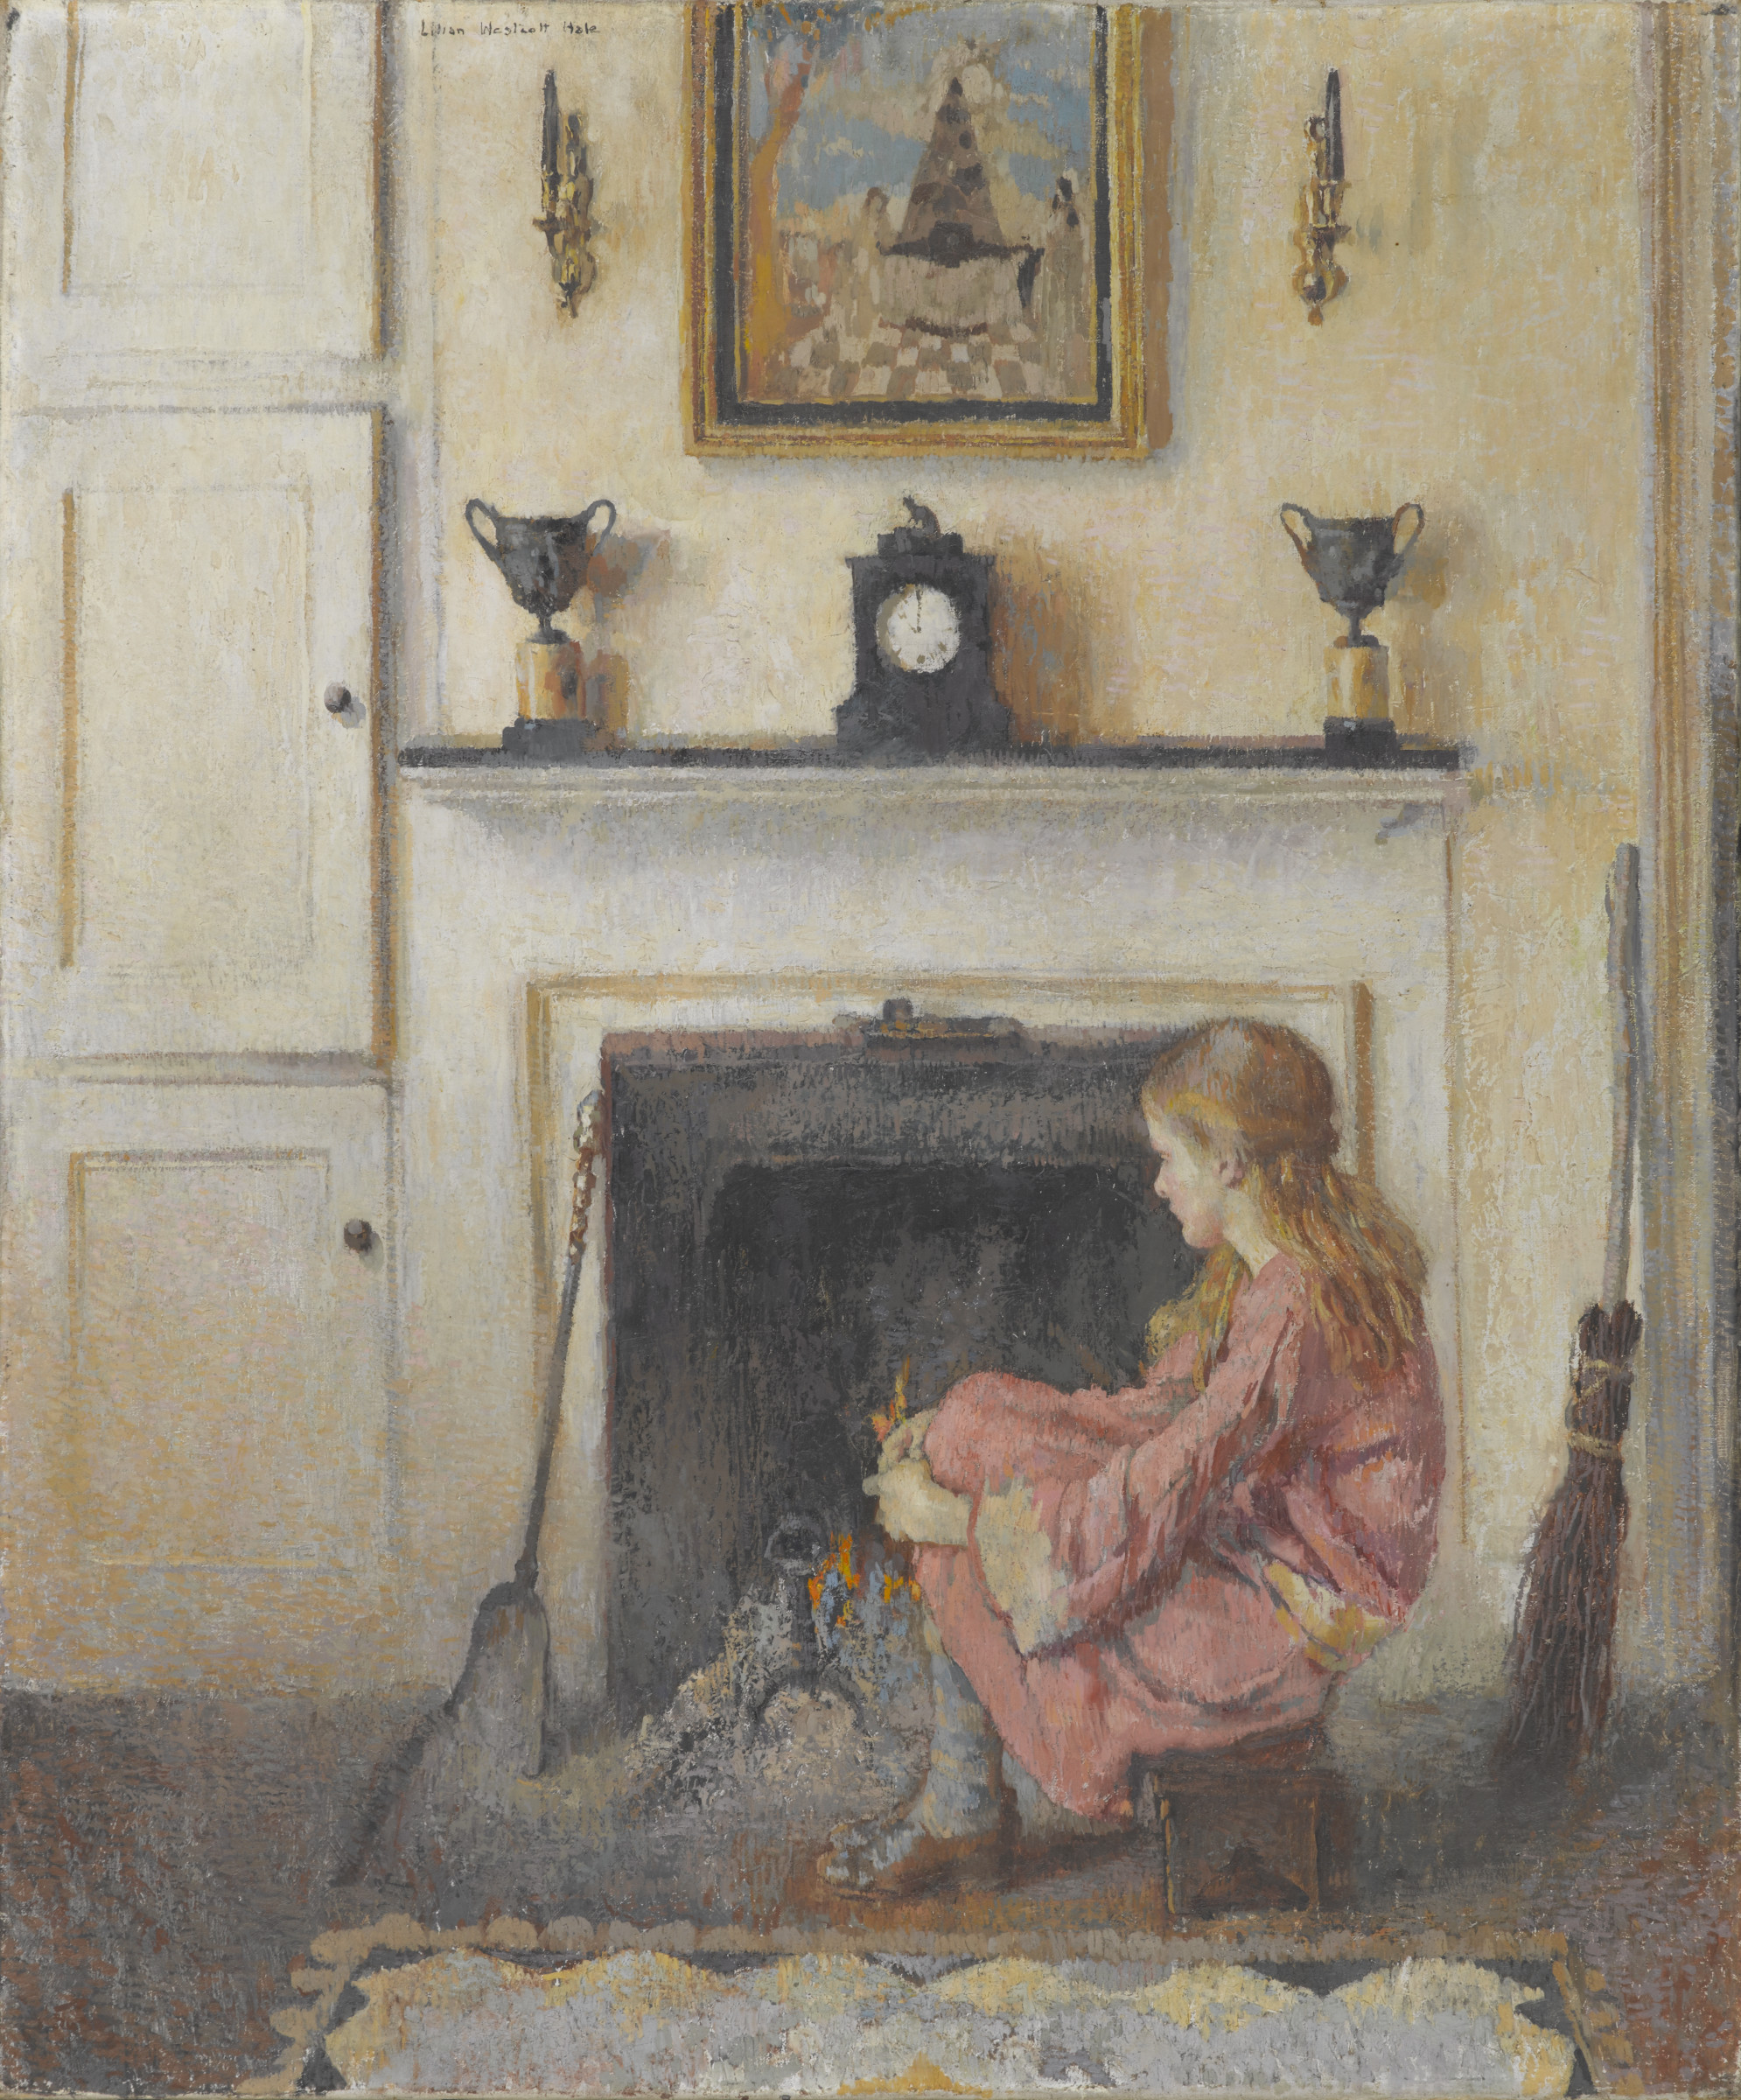 Alice Sit by the Fire by Lilian Westcott Hale - 1925 - 91.4 x 76.2 cm North Carolina Museum of Art